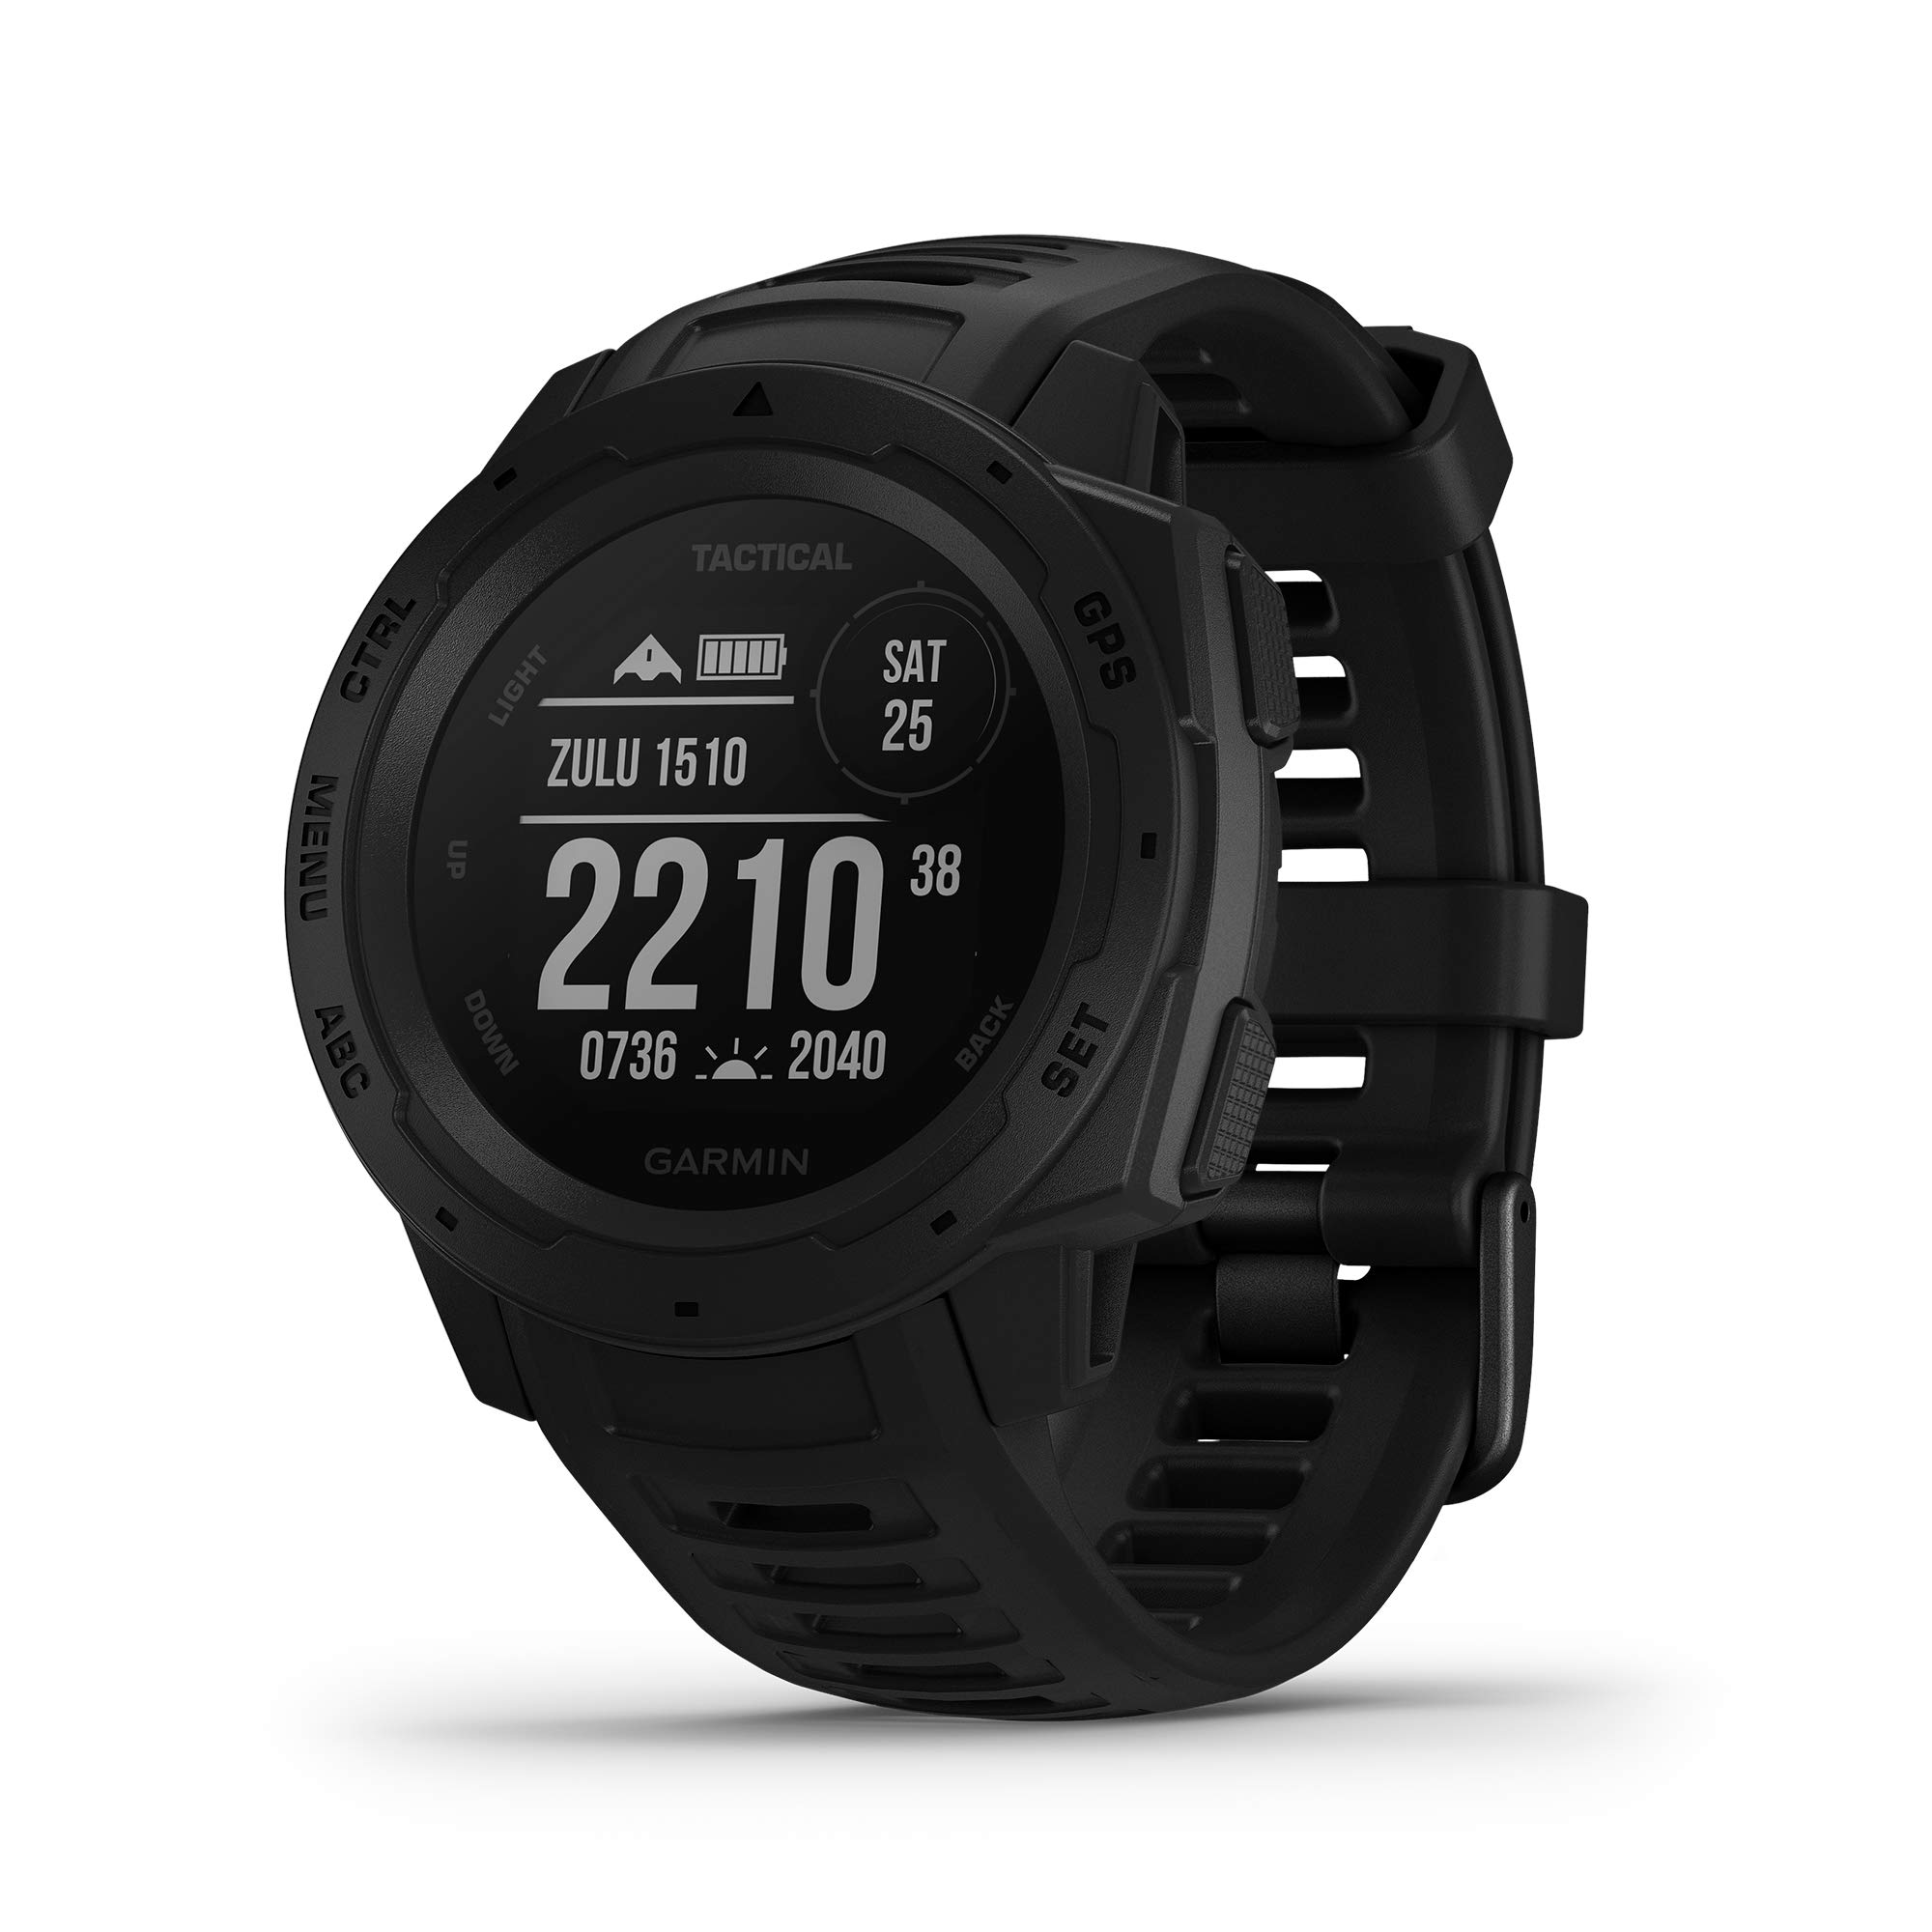 Garmin Instinct Tactical 坚固型 GPS 手表，具有战术特定功能，符合美国军用标准 810G，具有耐热、抗冲击和防水性能，黑色